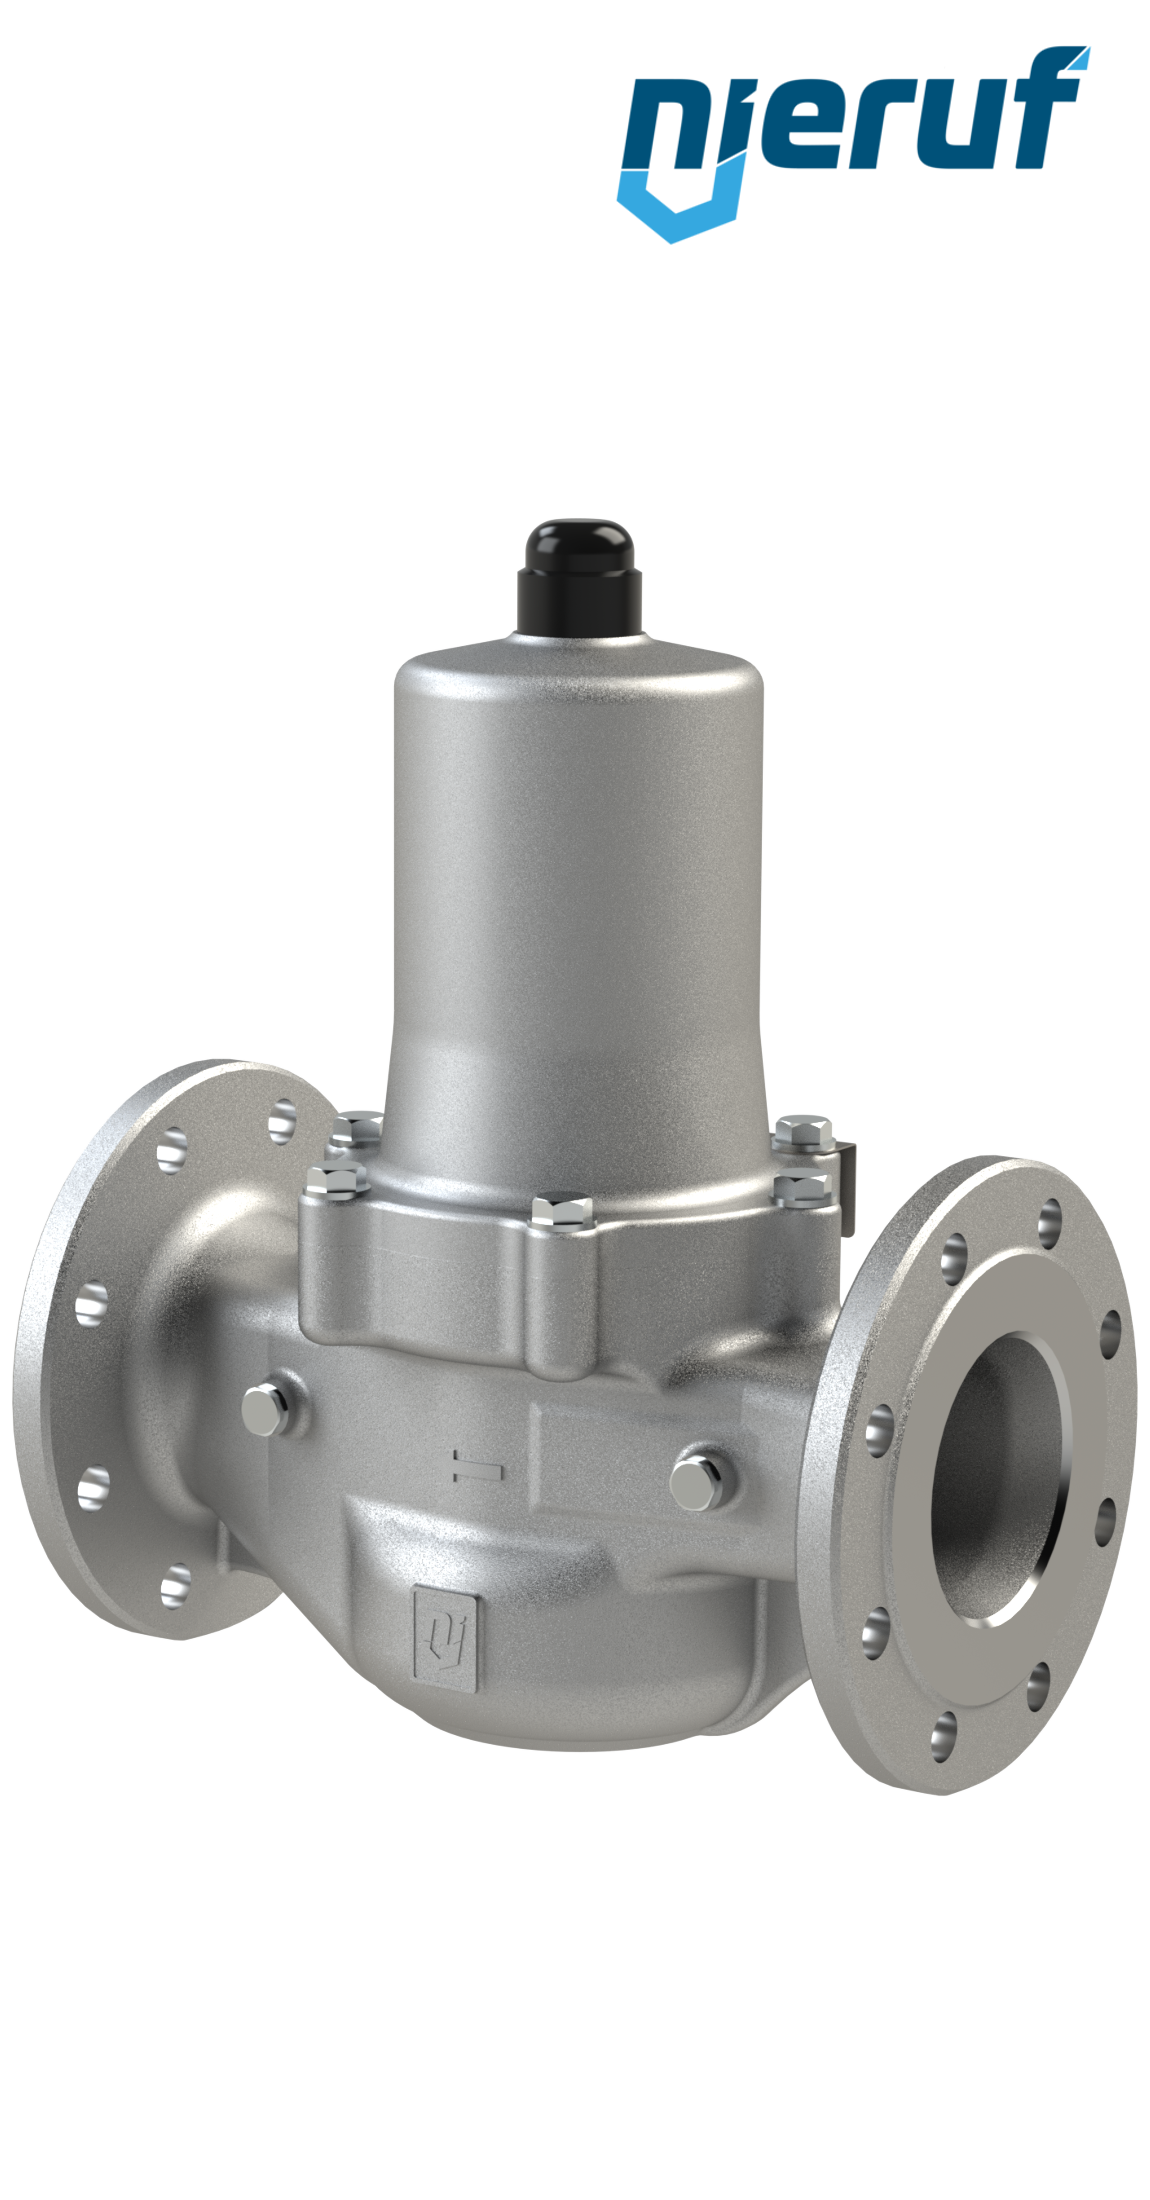 Flange-pressure reducing valve DN 100 PN16 DM07 stainless steel EPDM 1.0 - 8.0 bar